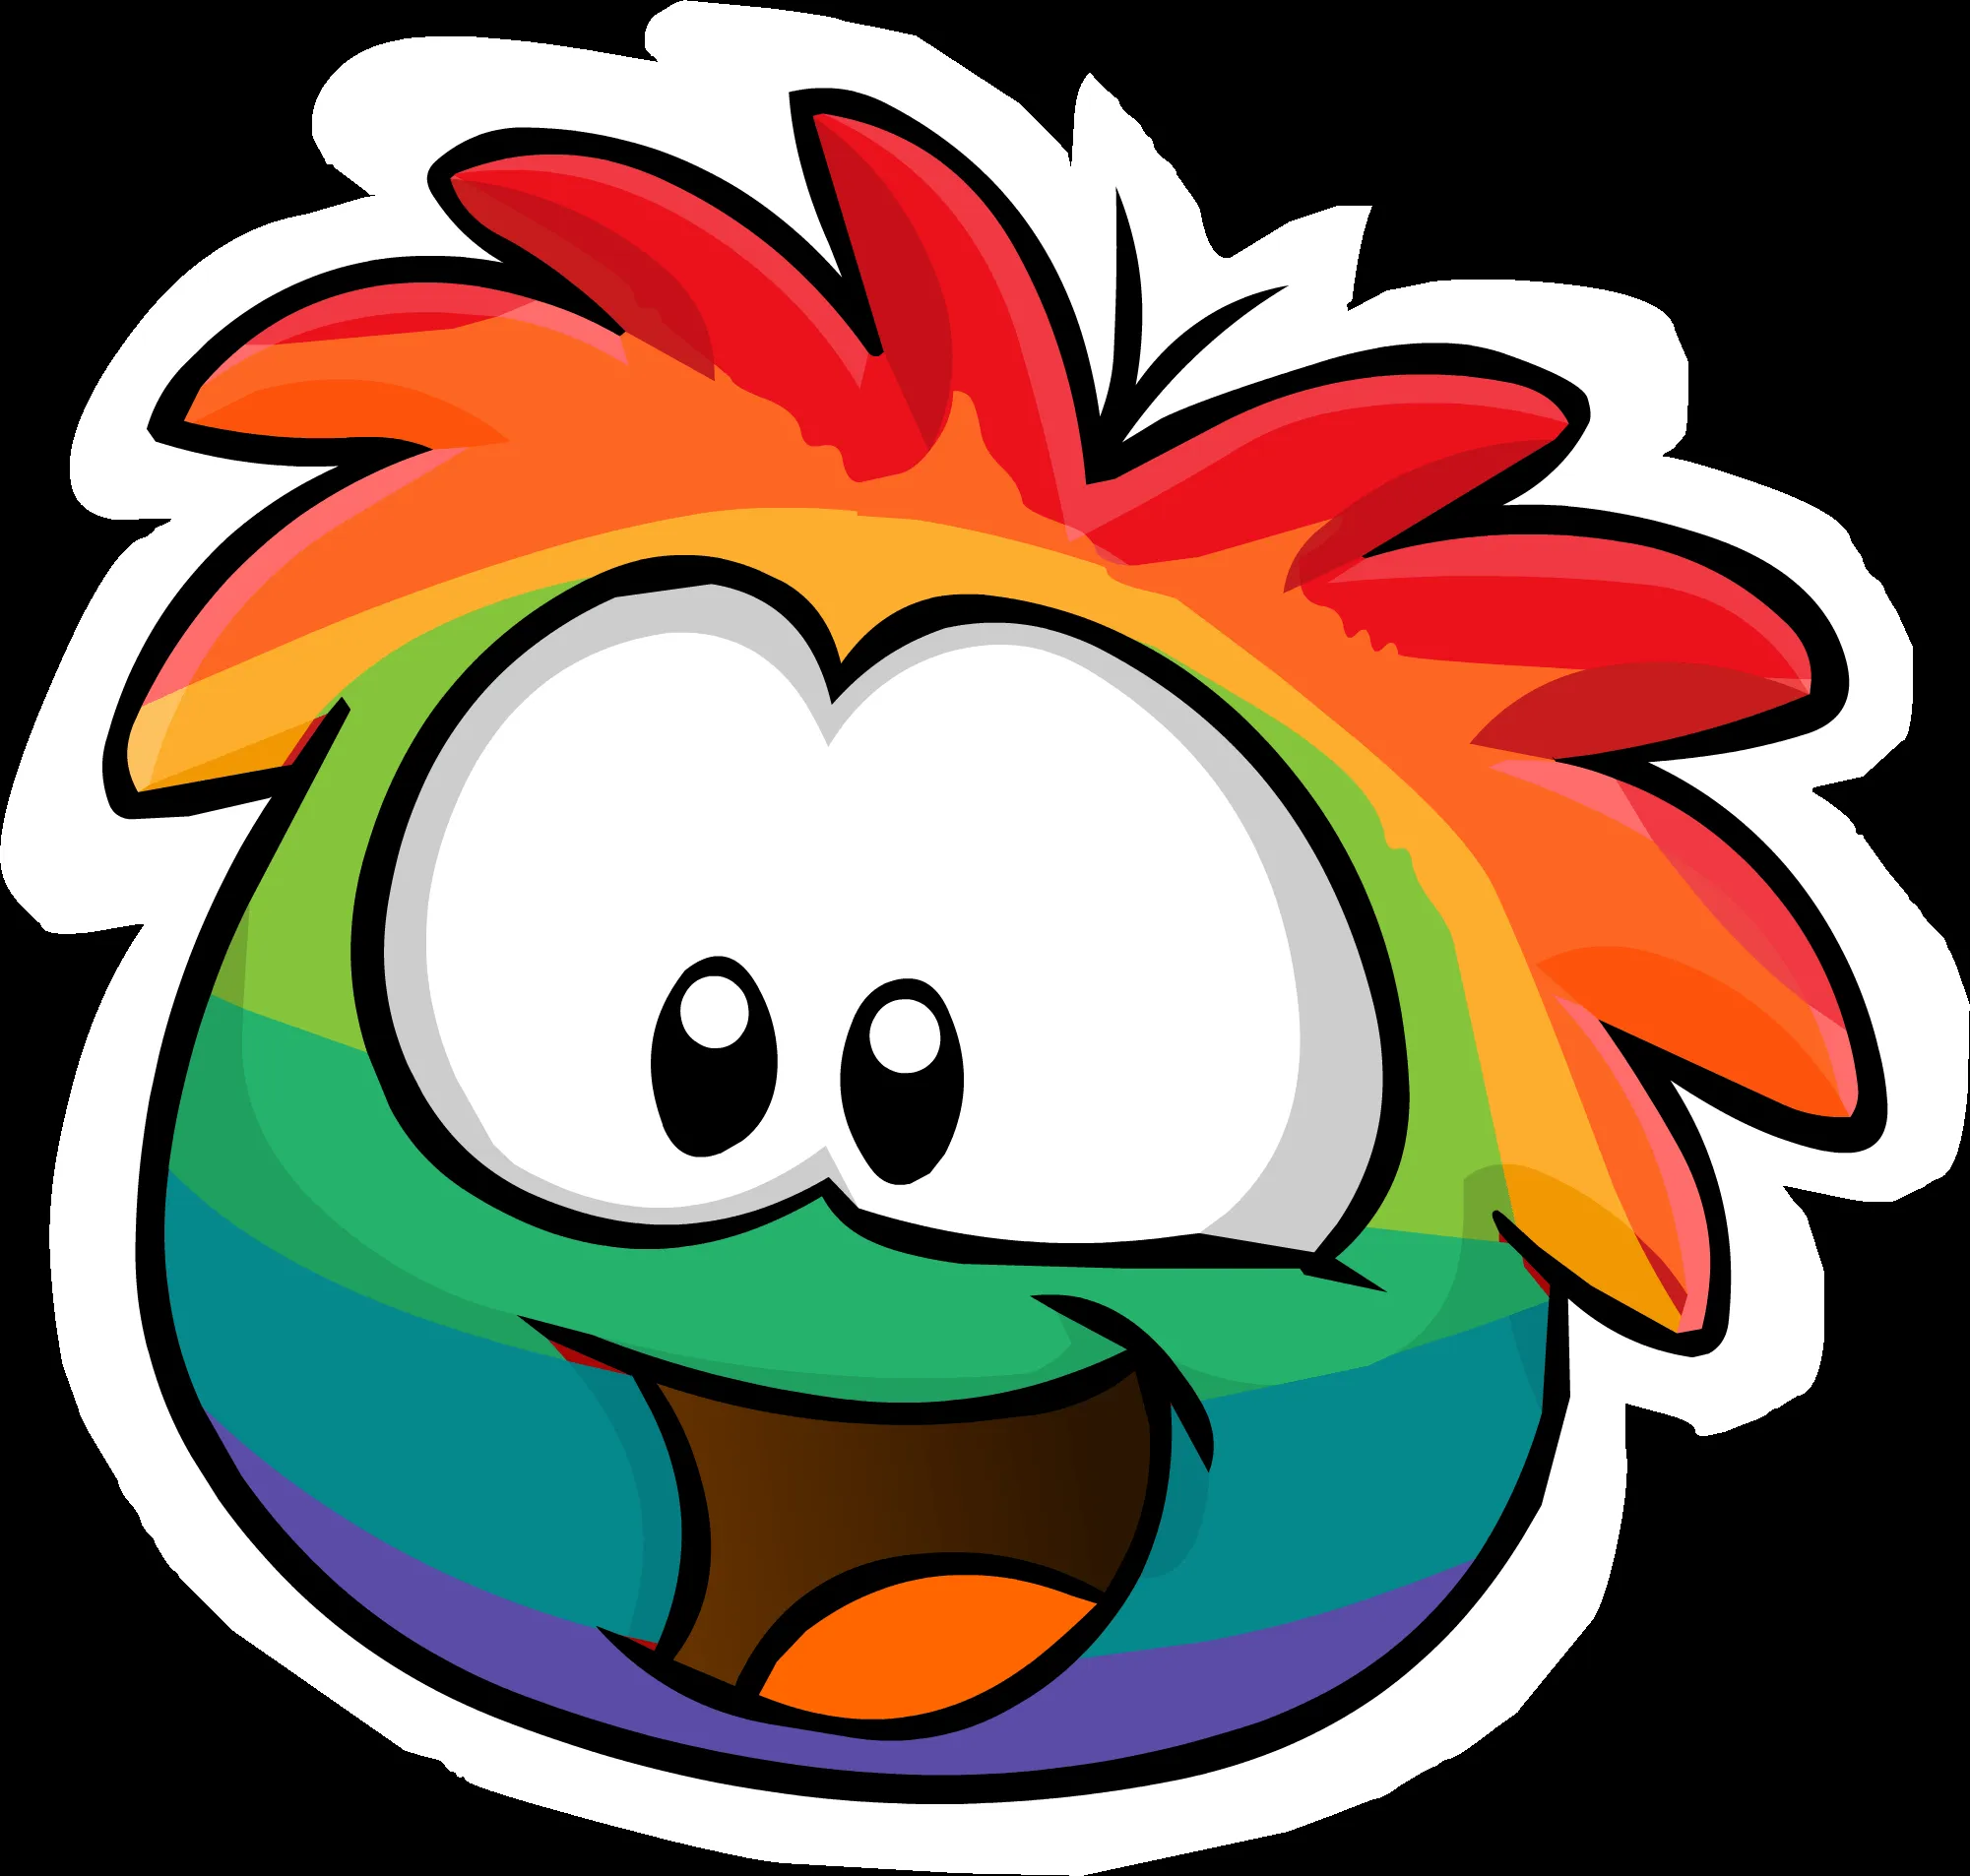 Rainbow Puffle Pin - Club Penguin Wiki - The free, editable ...